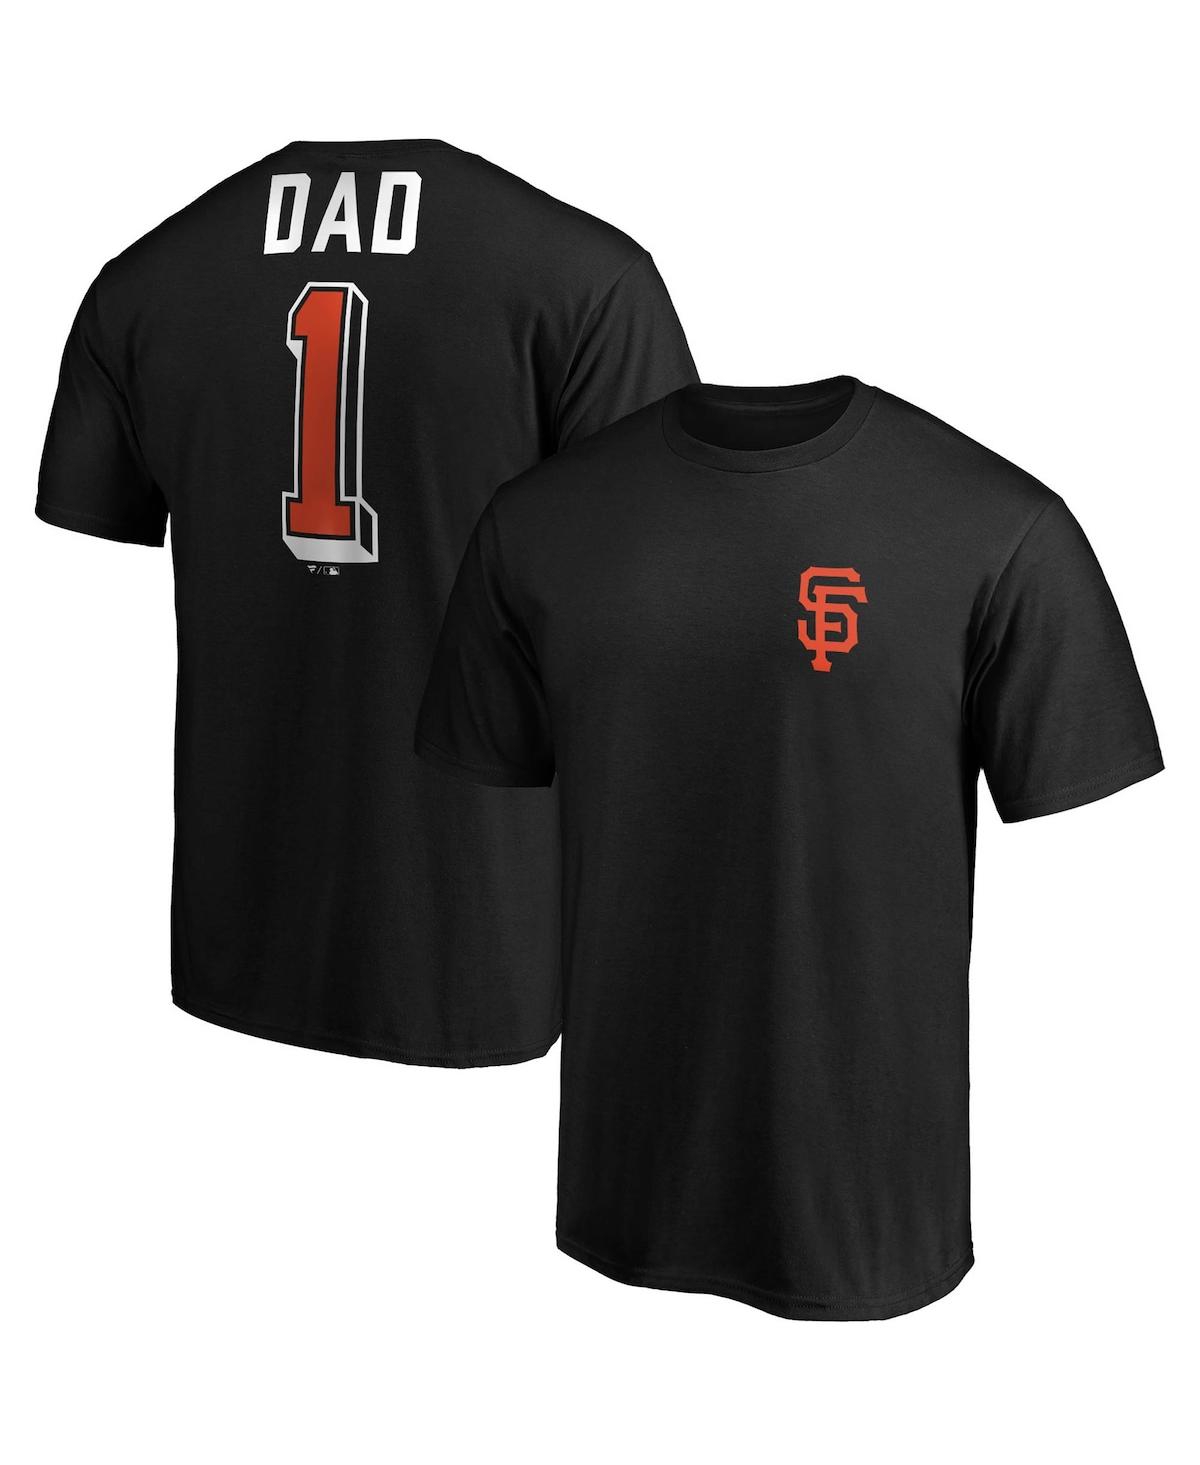 Fanatics Men's  Black San Francisco Giants Number One Dad Team T-shirt